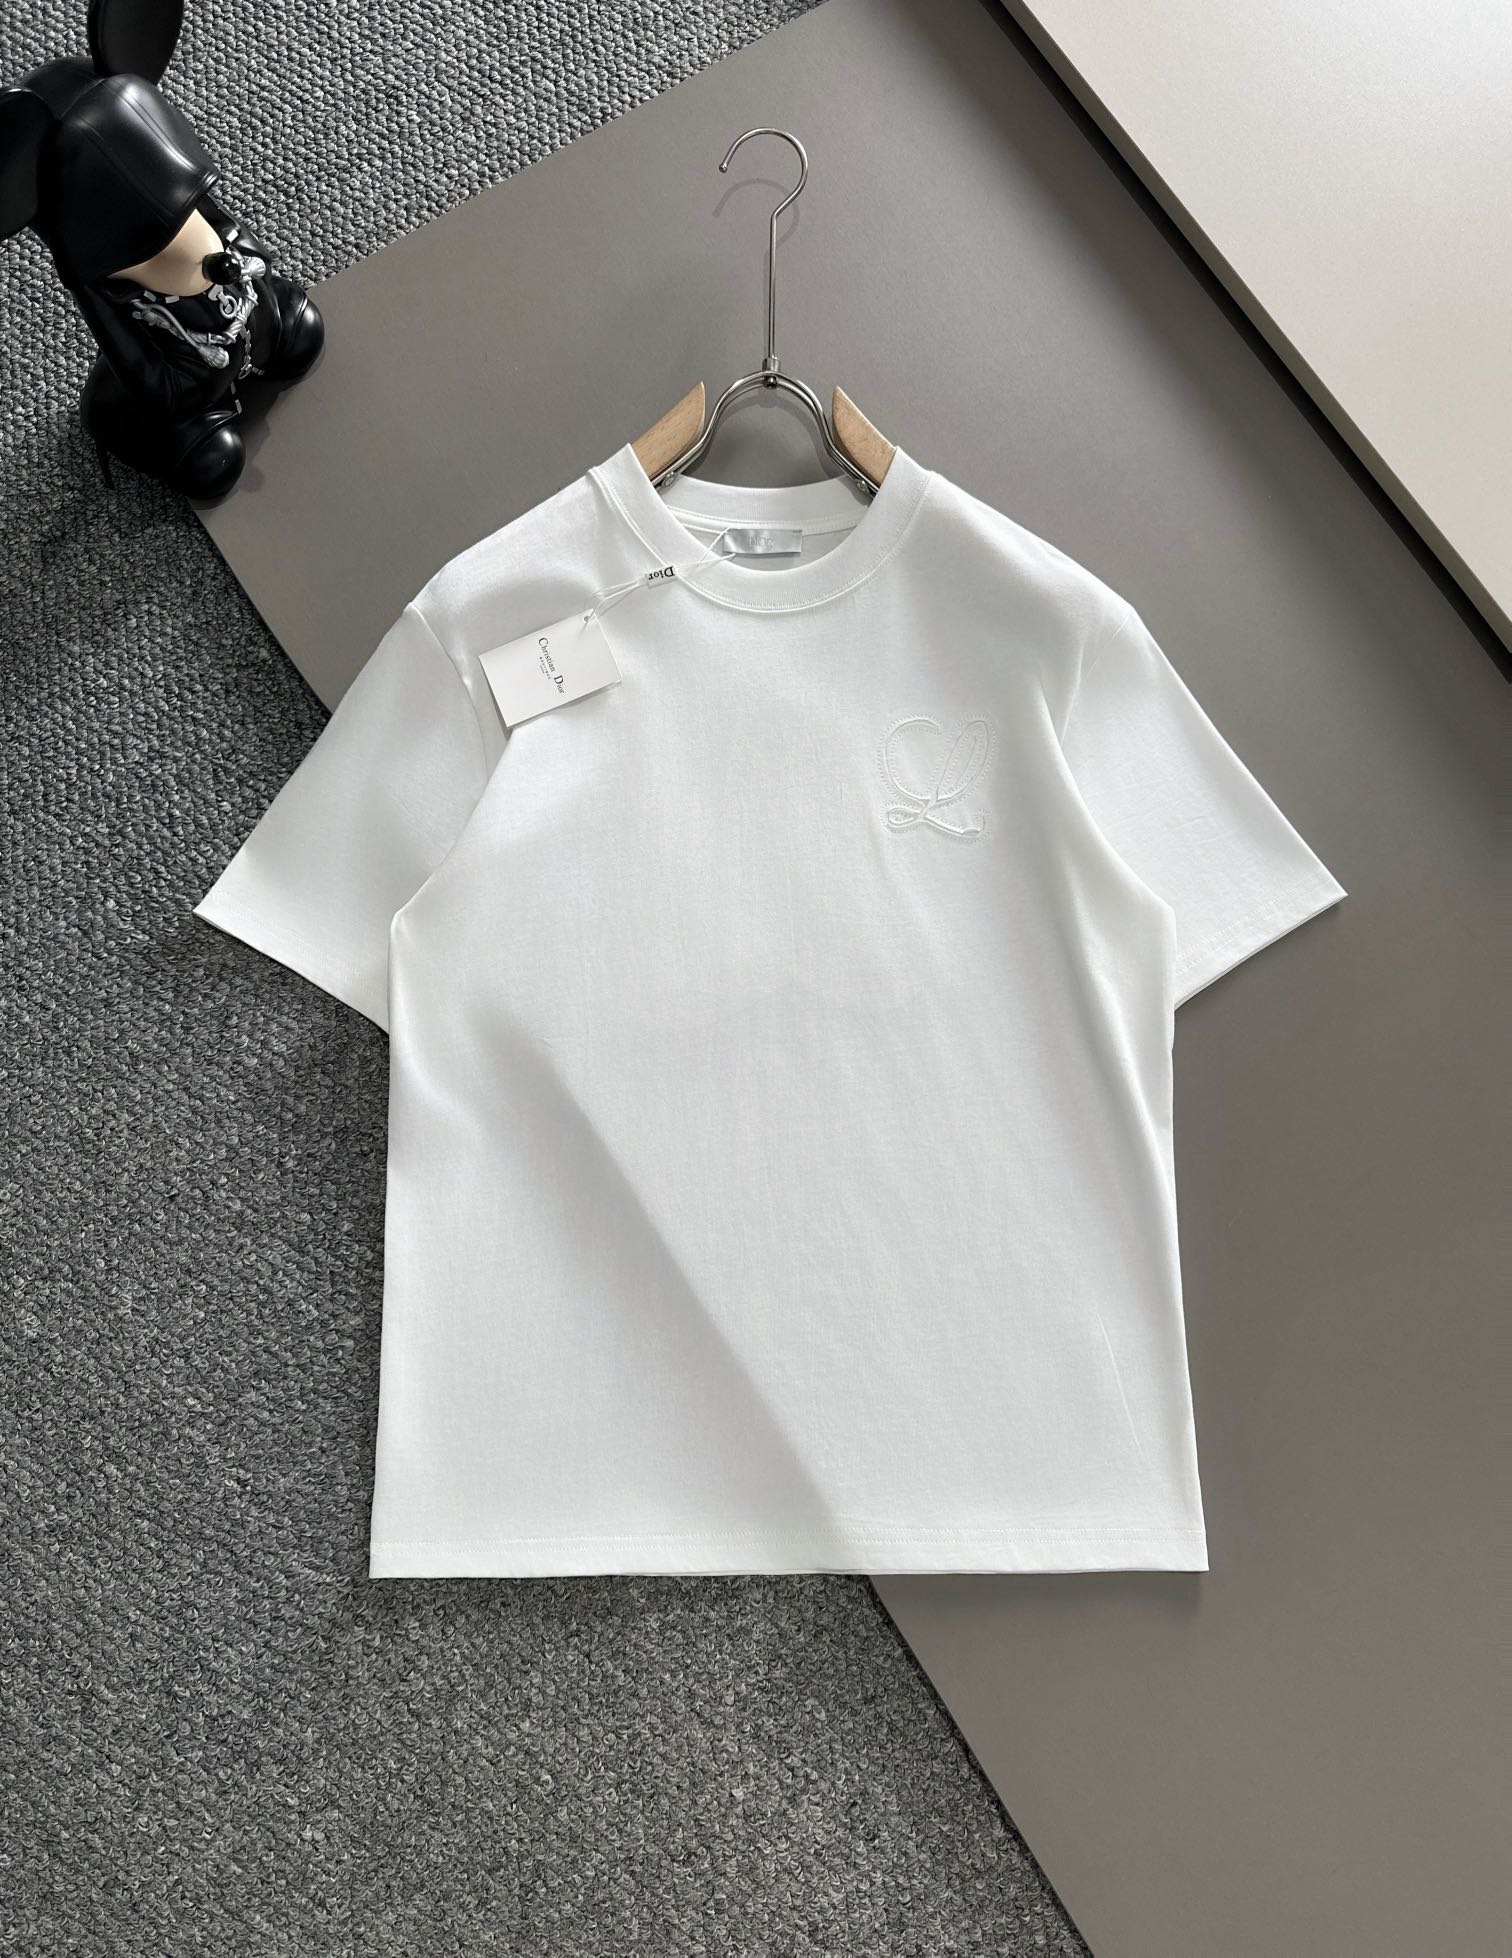 Loewe Clothing T-Shirt Black White Cotton Fashion Short Sleeve